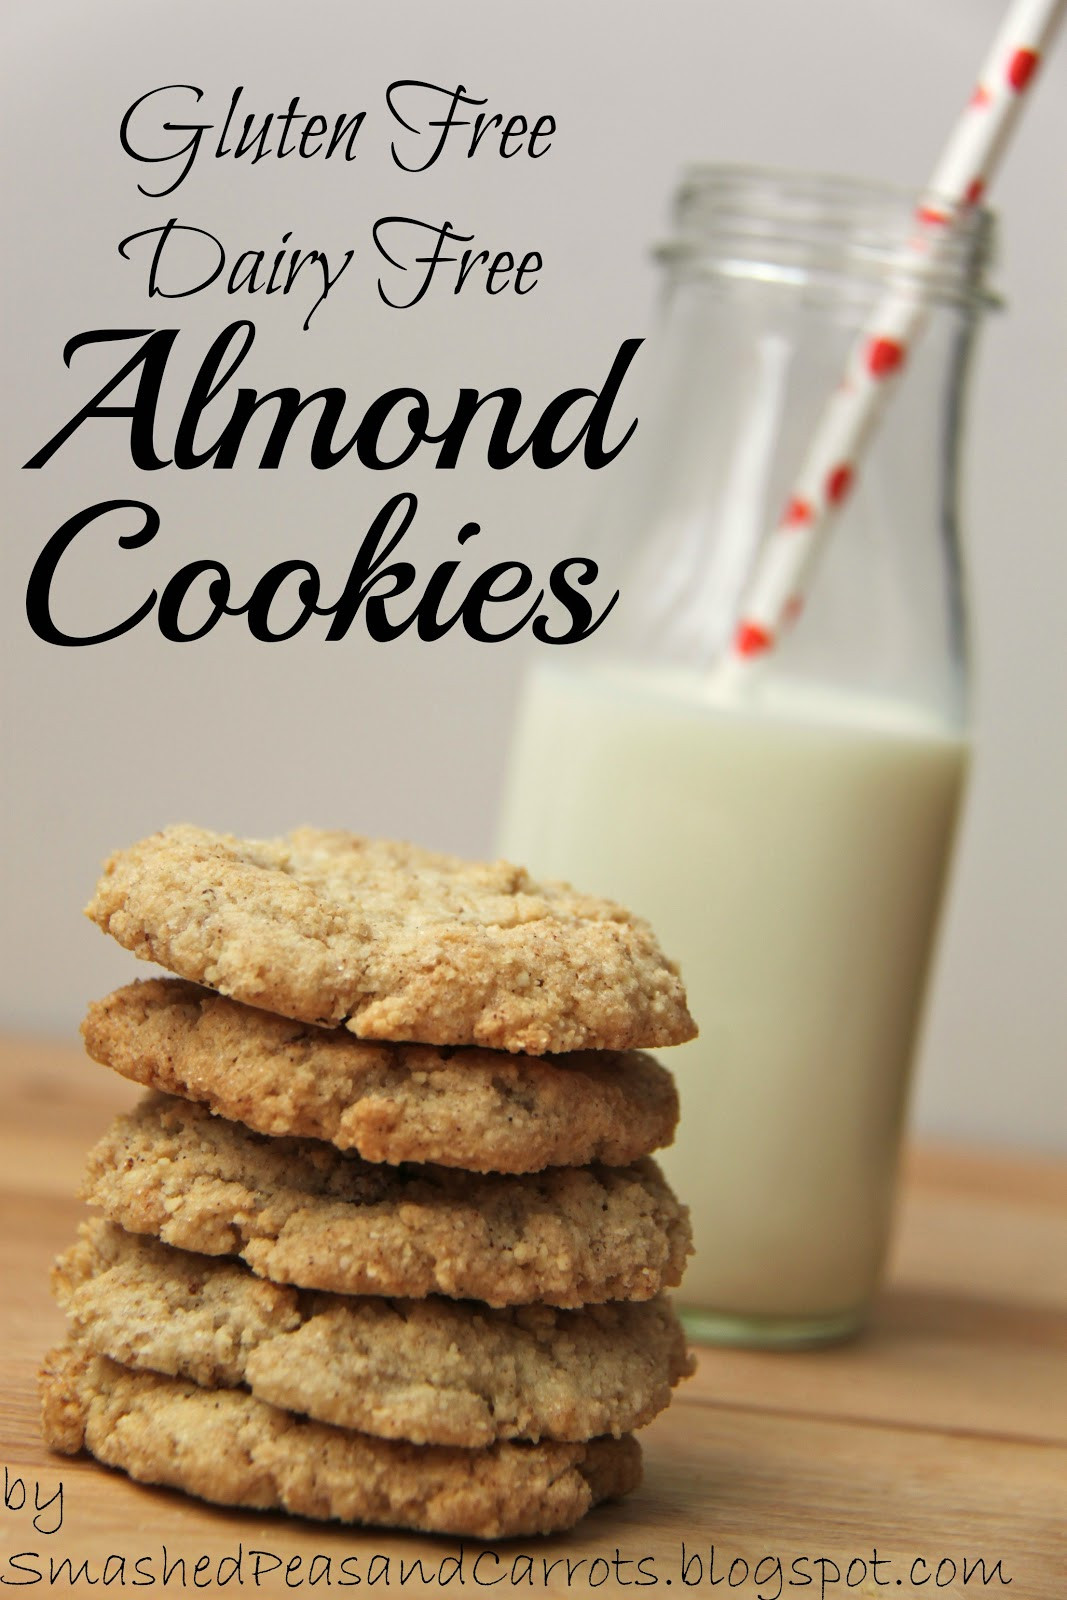 Gluten Free Dairy Free Cookie Recipes
 RECIPE Gluten Free Dairy Free Almond Cookies Smashed